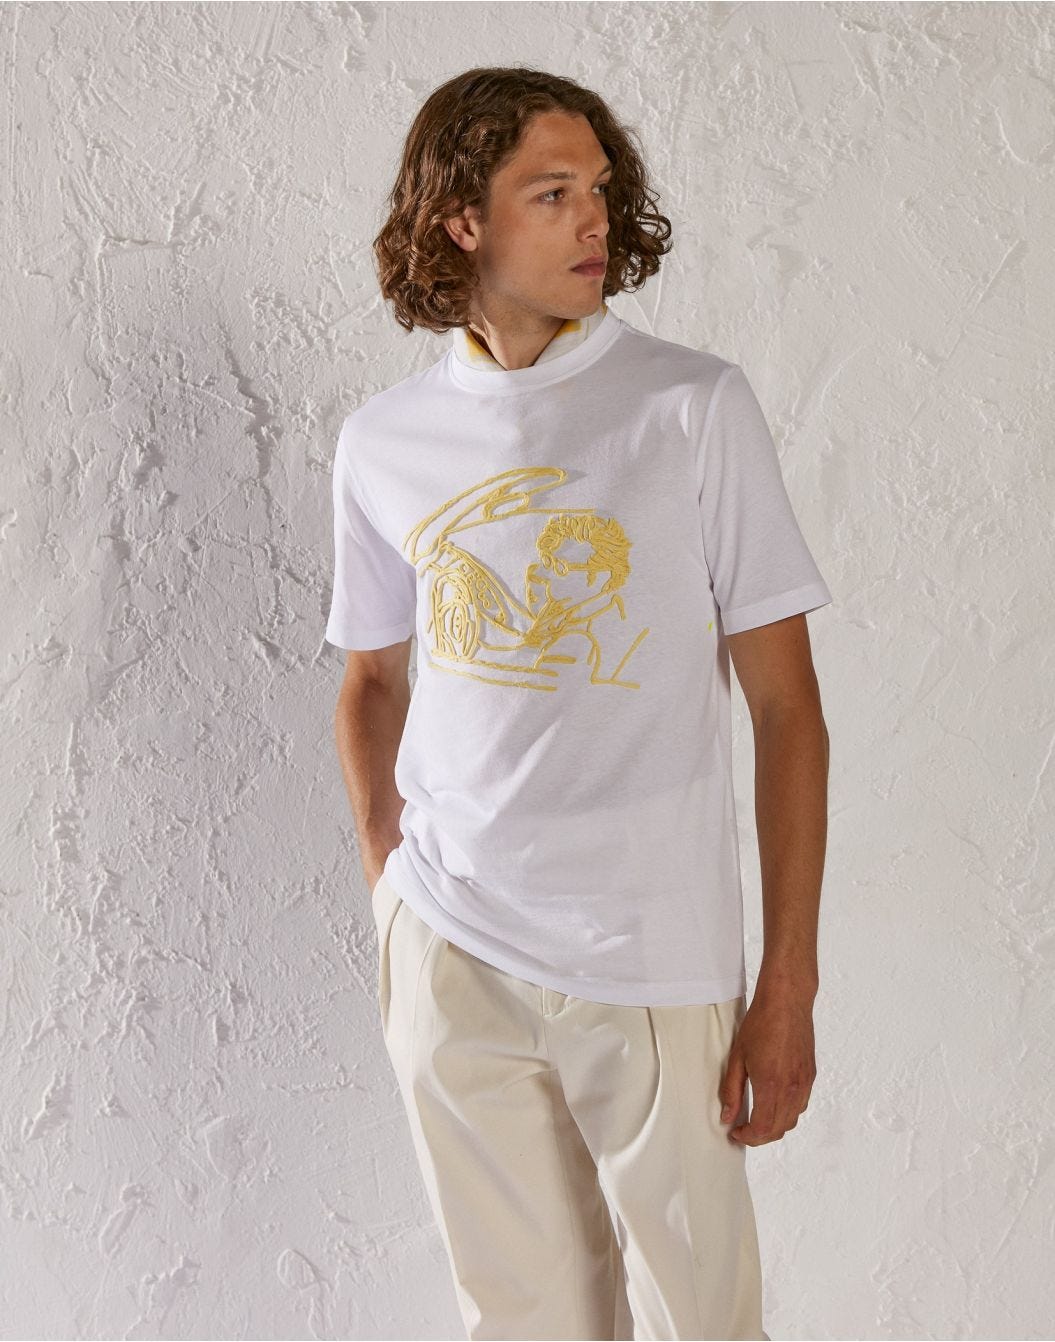 T-shirt with matching embroidery - Luigi Lardini capsule